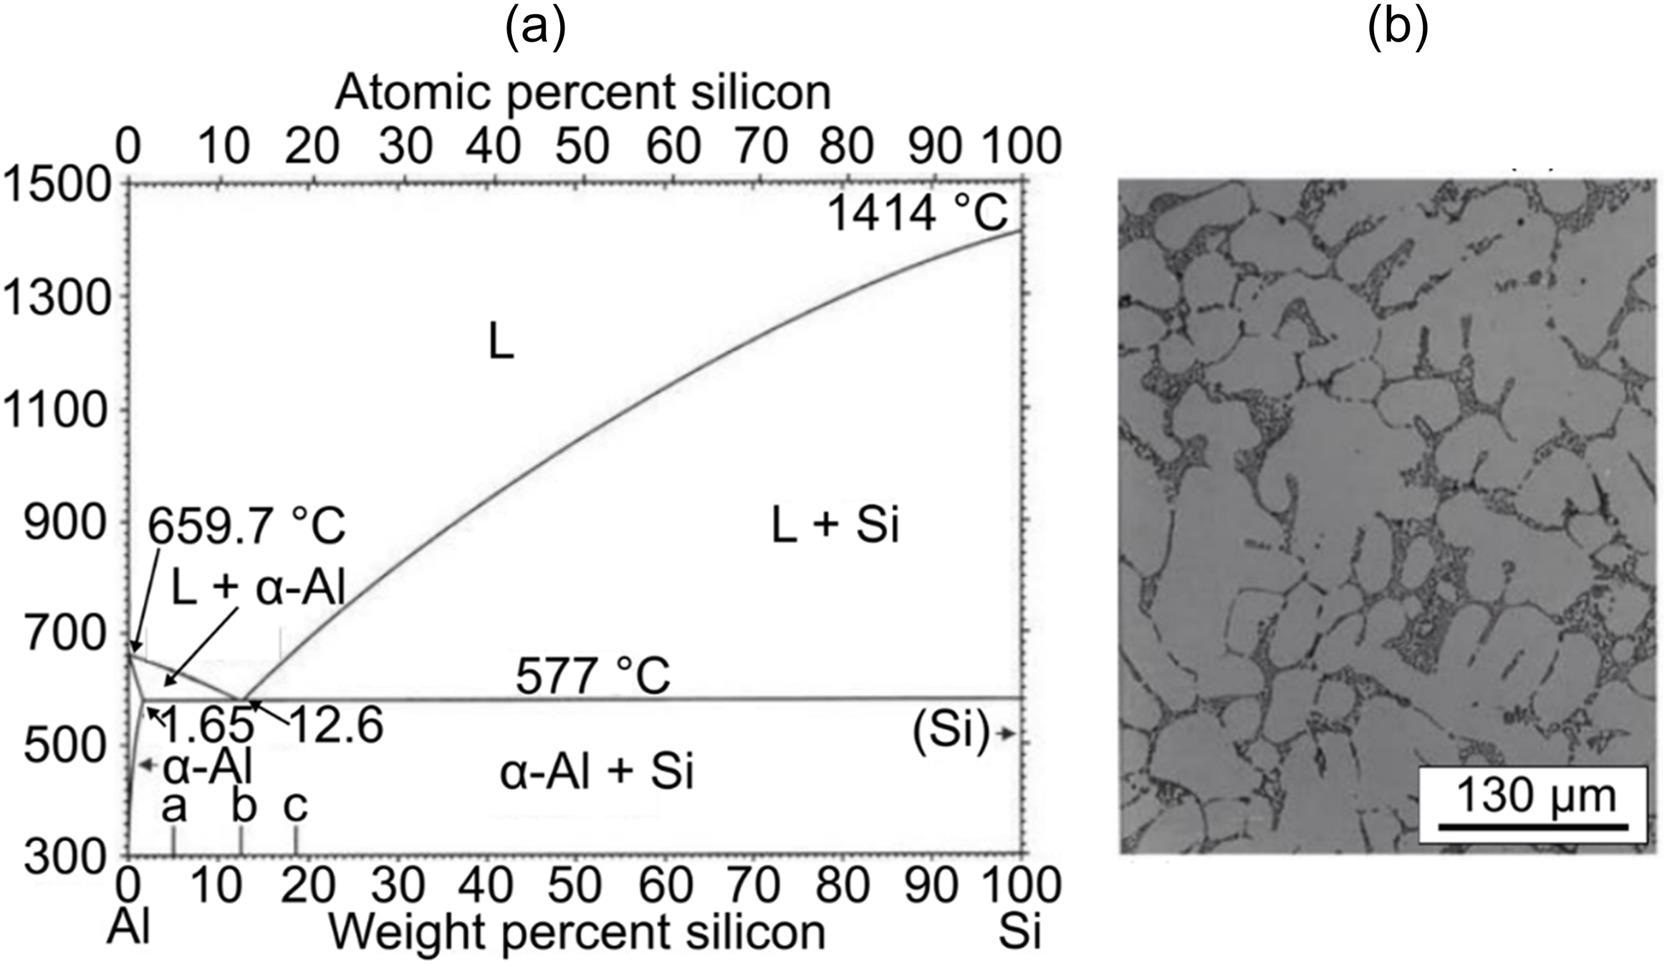 (a) Binary Al-Si phase diagram and (a) representative micrograph of hypoeutectic Al-Si alloy containing dendritic a-Al solid solution (light areas) and interdendritic Al-Si eutectic (dark areas).